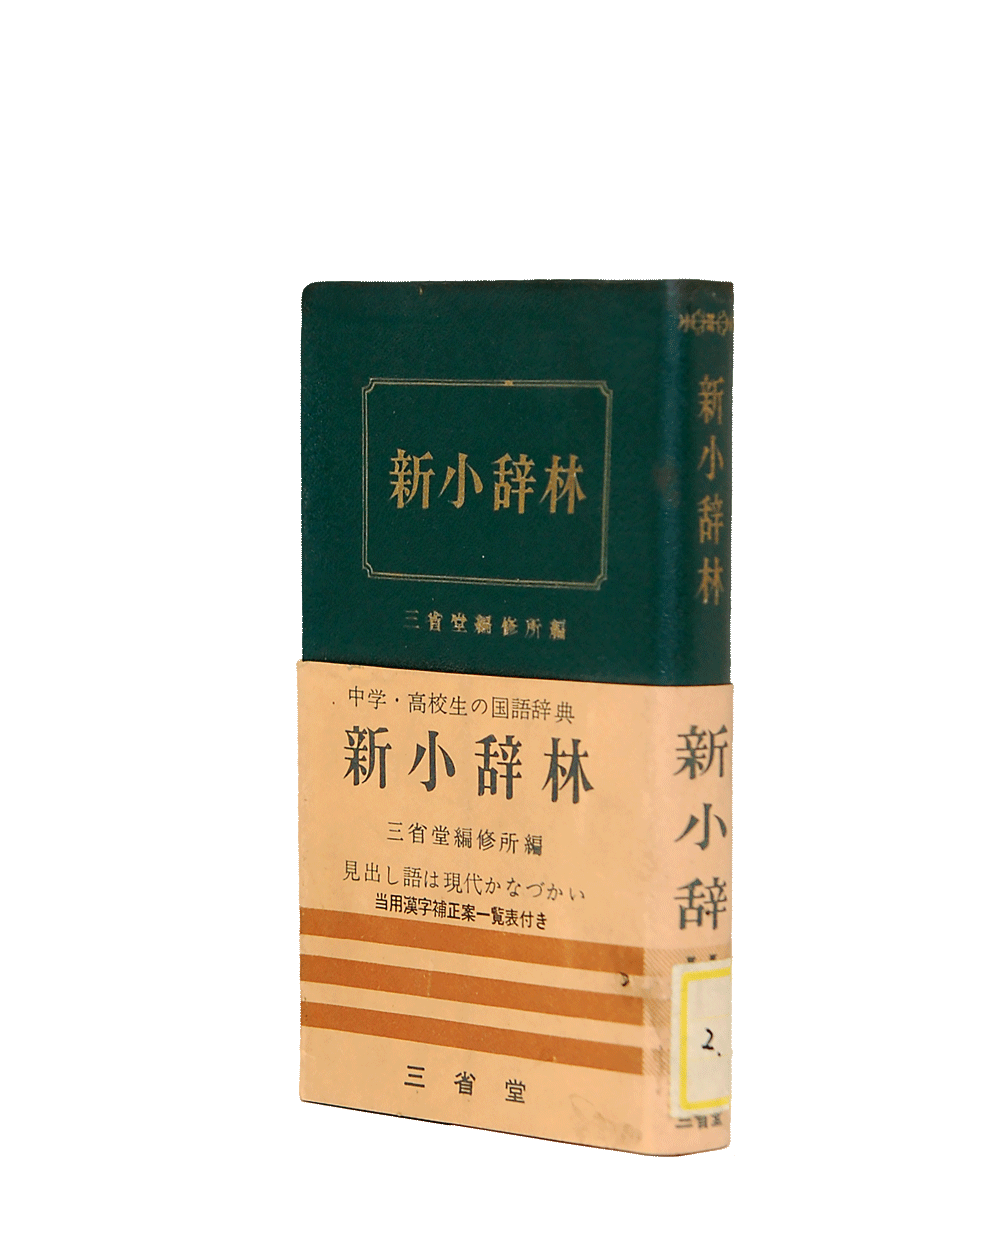 安価 m1-537三省堂 1988年11月発行 国語辞典 昭和 レトロ